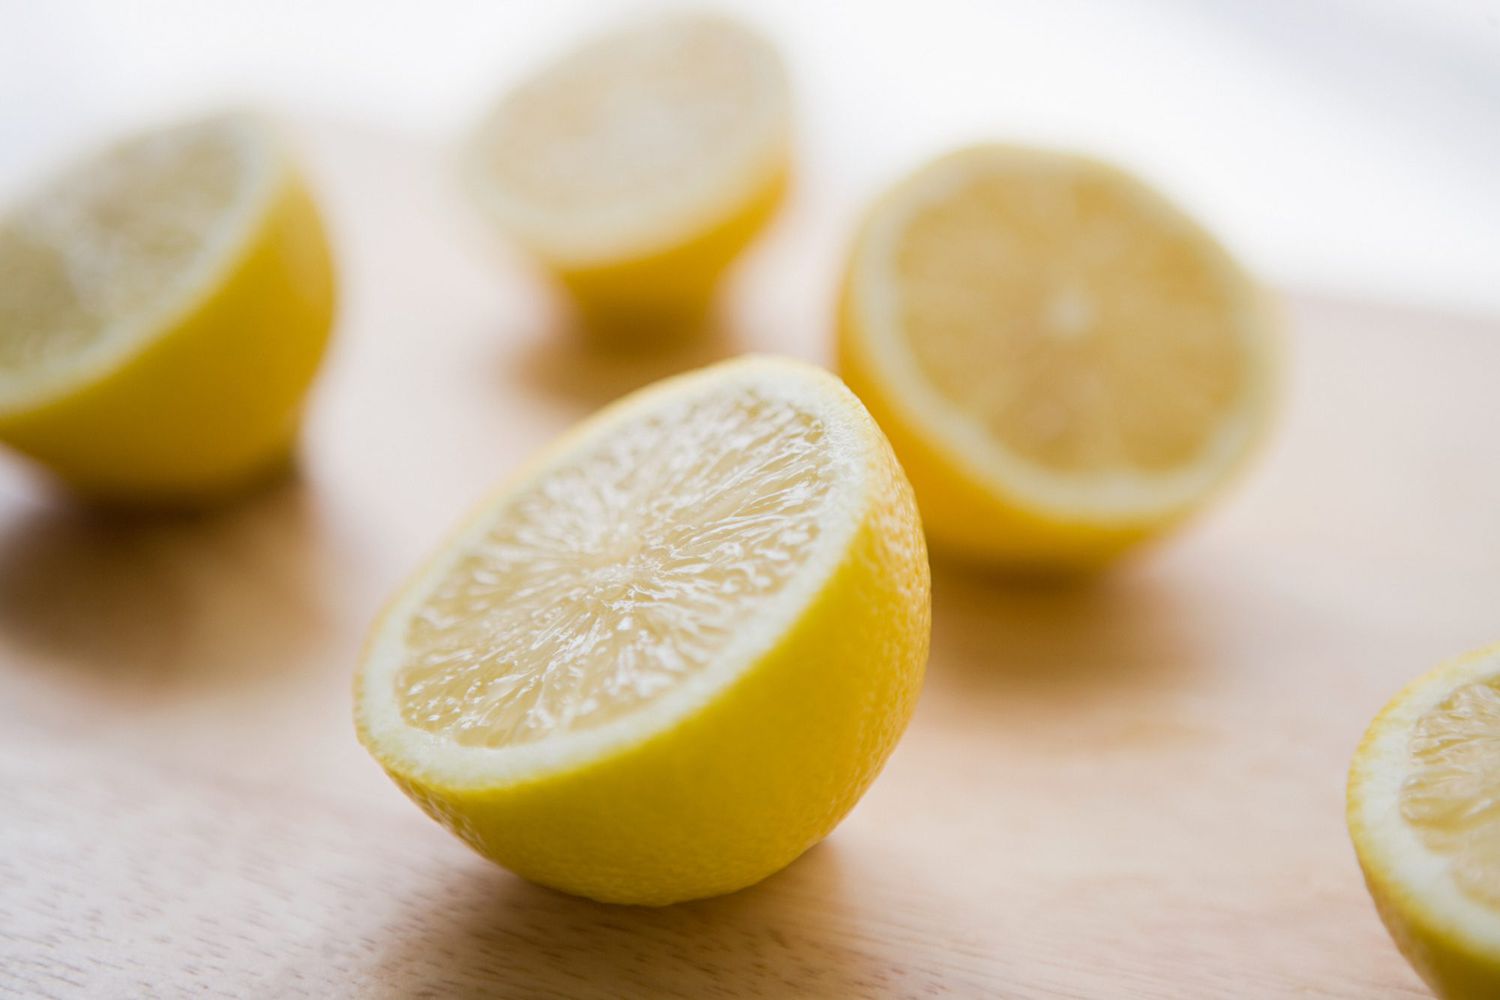 Lemon halves